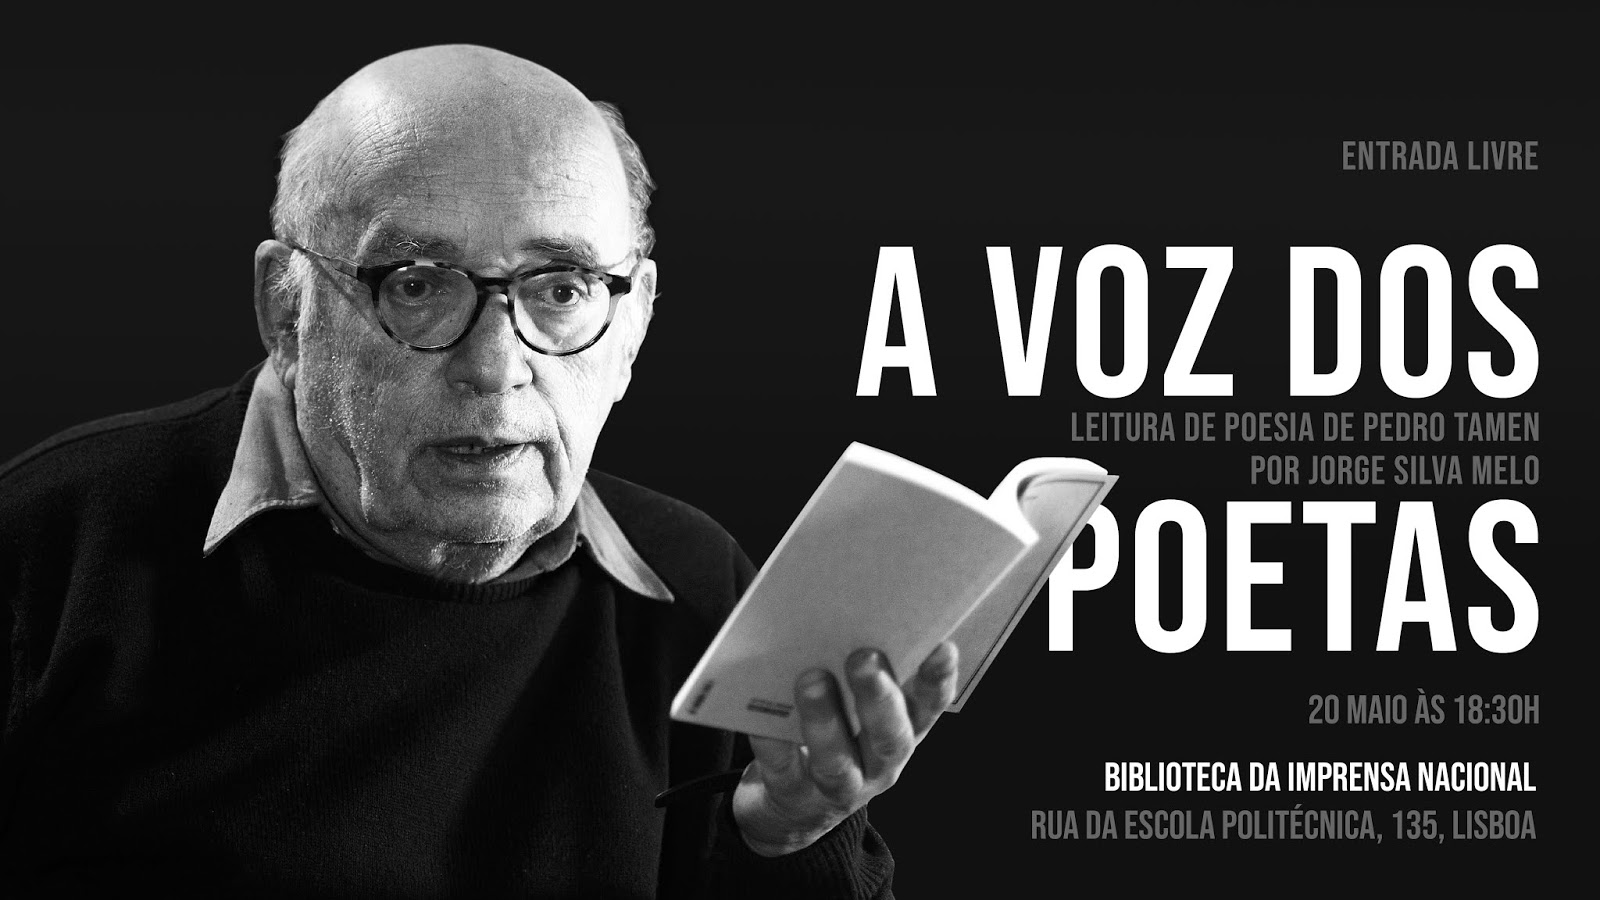 20 de maio |18.30h |Poesia de Pedro Tamen dita por Jorge Silva Melo e Luís Lucas na Imprensa Nacional